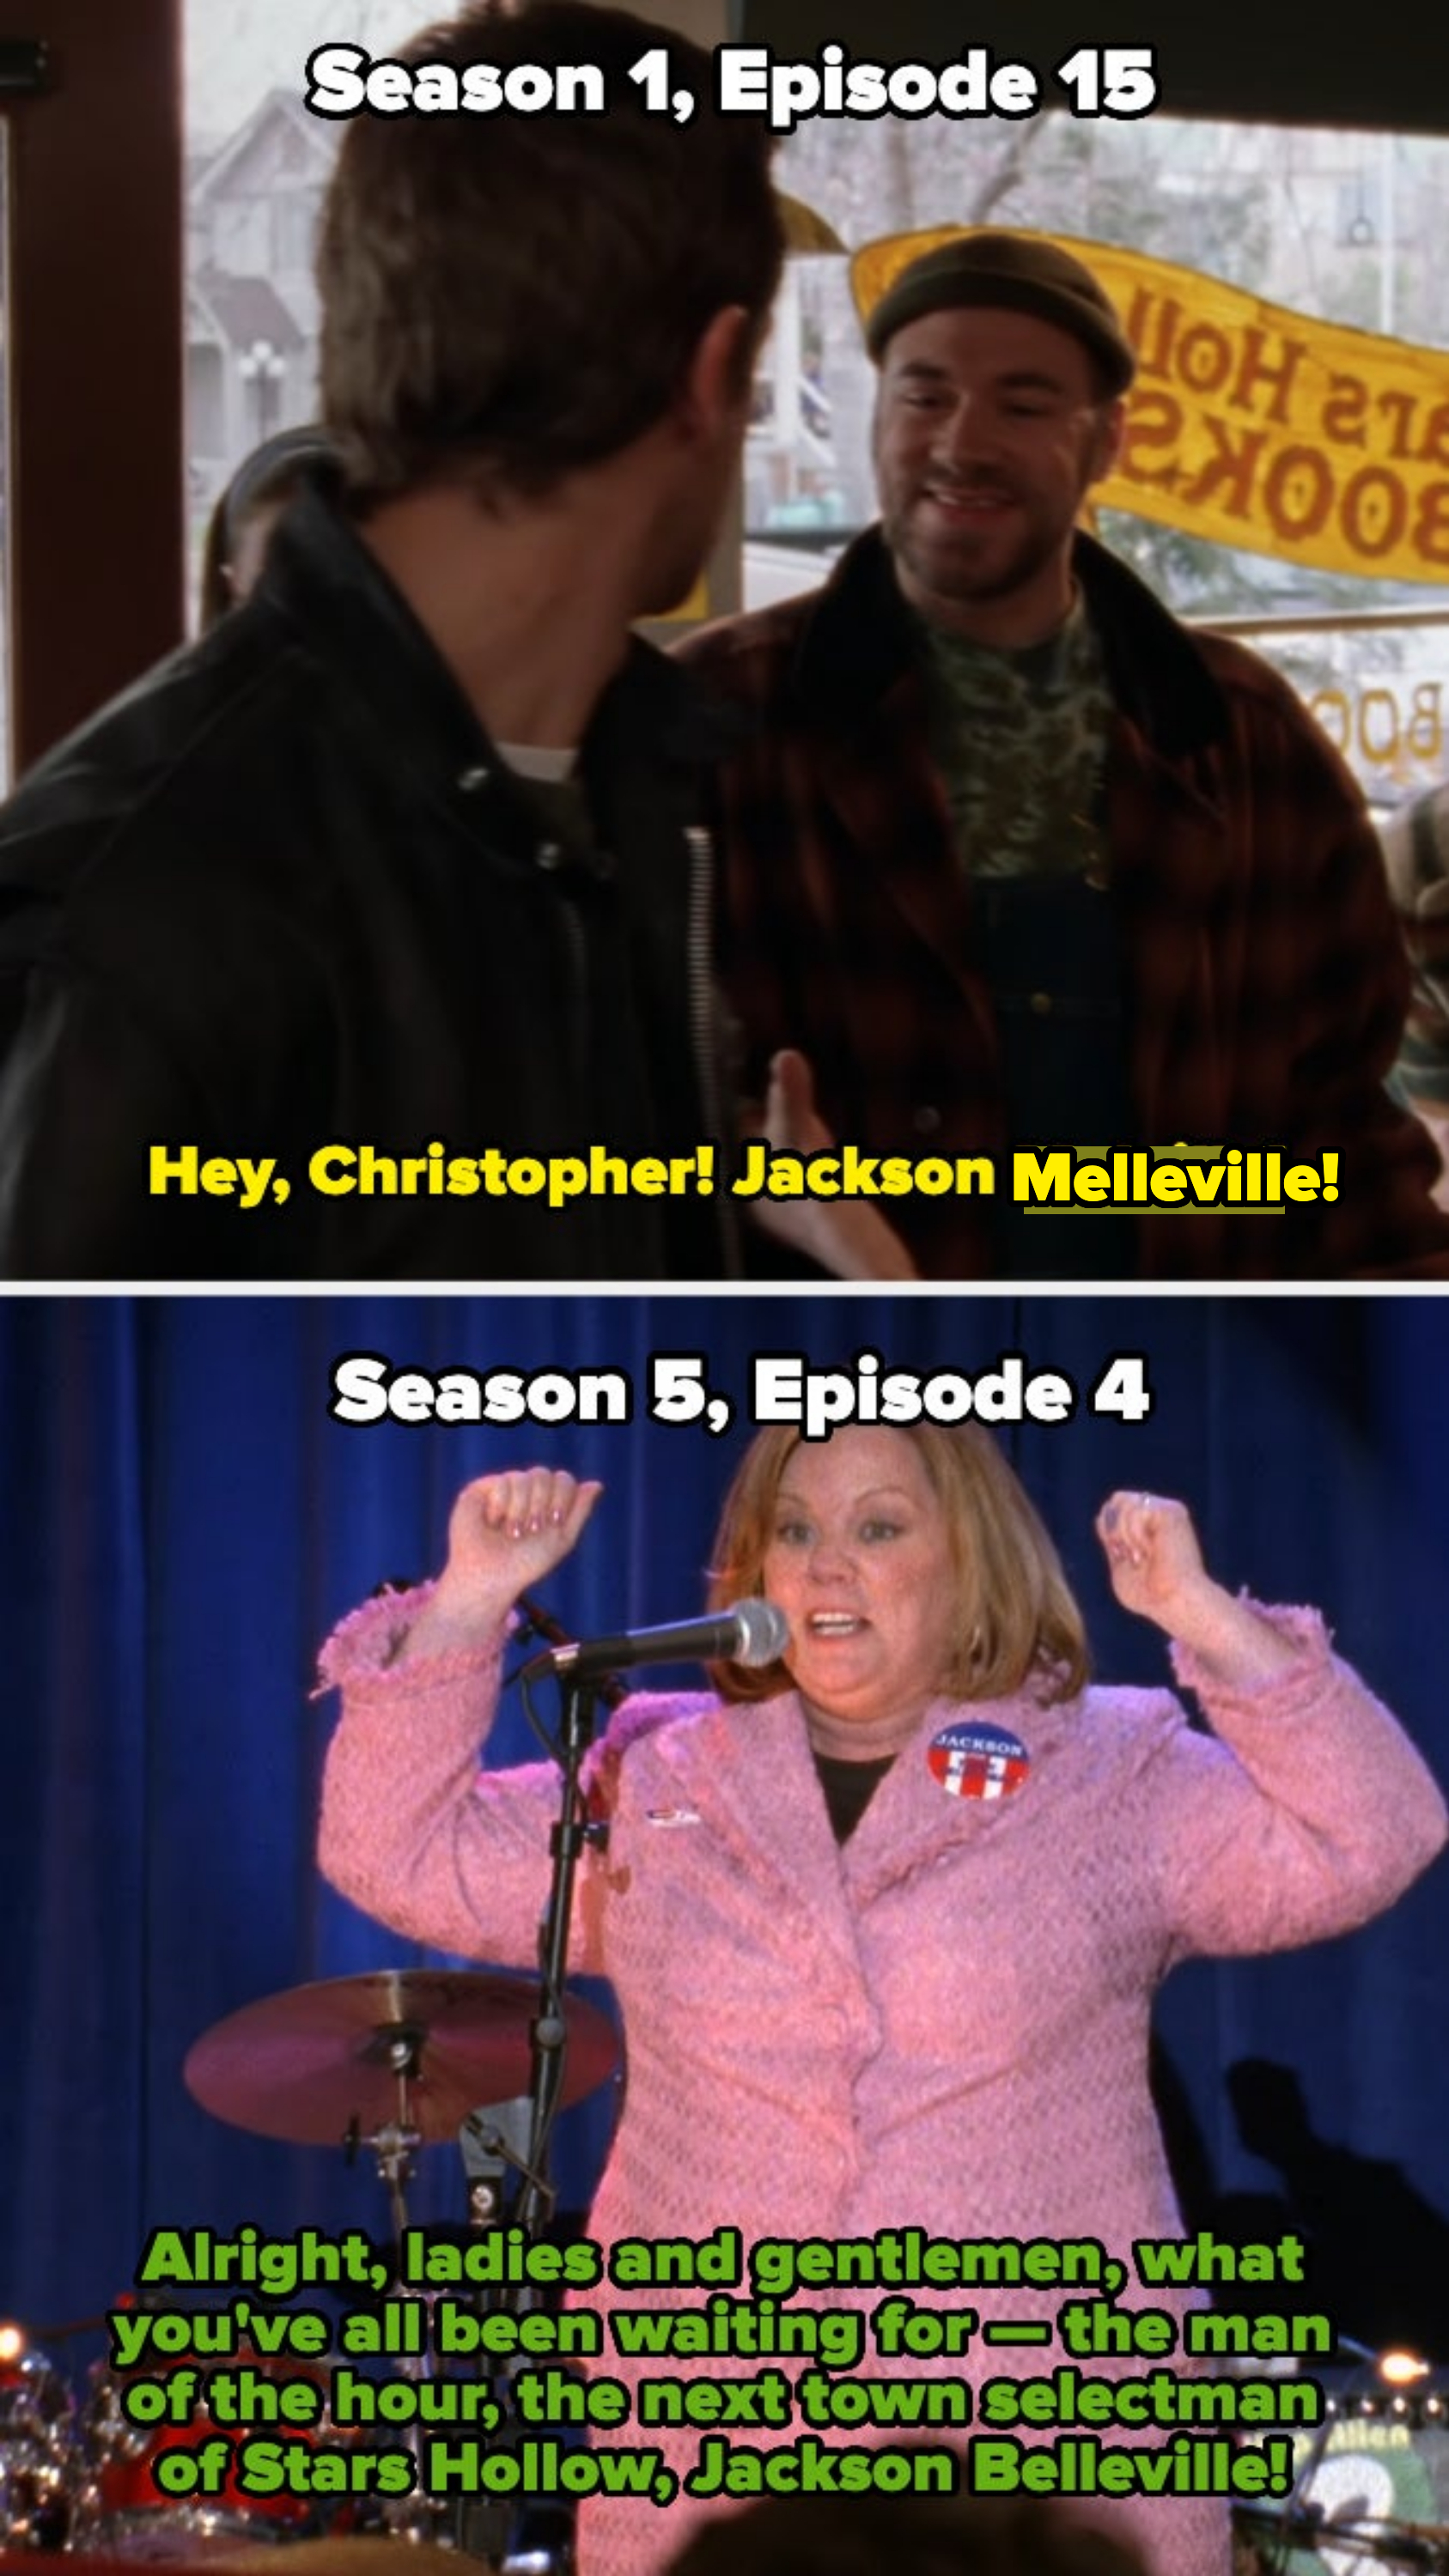 In Season 1, Jackson introduces himself as Jackson Melleville, and in Season 5, Sookie announces him as Jackson Belleville